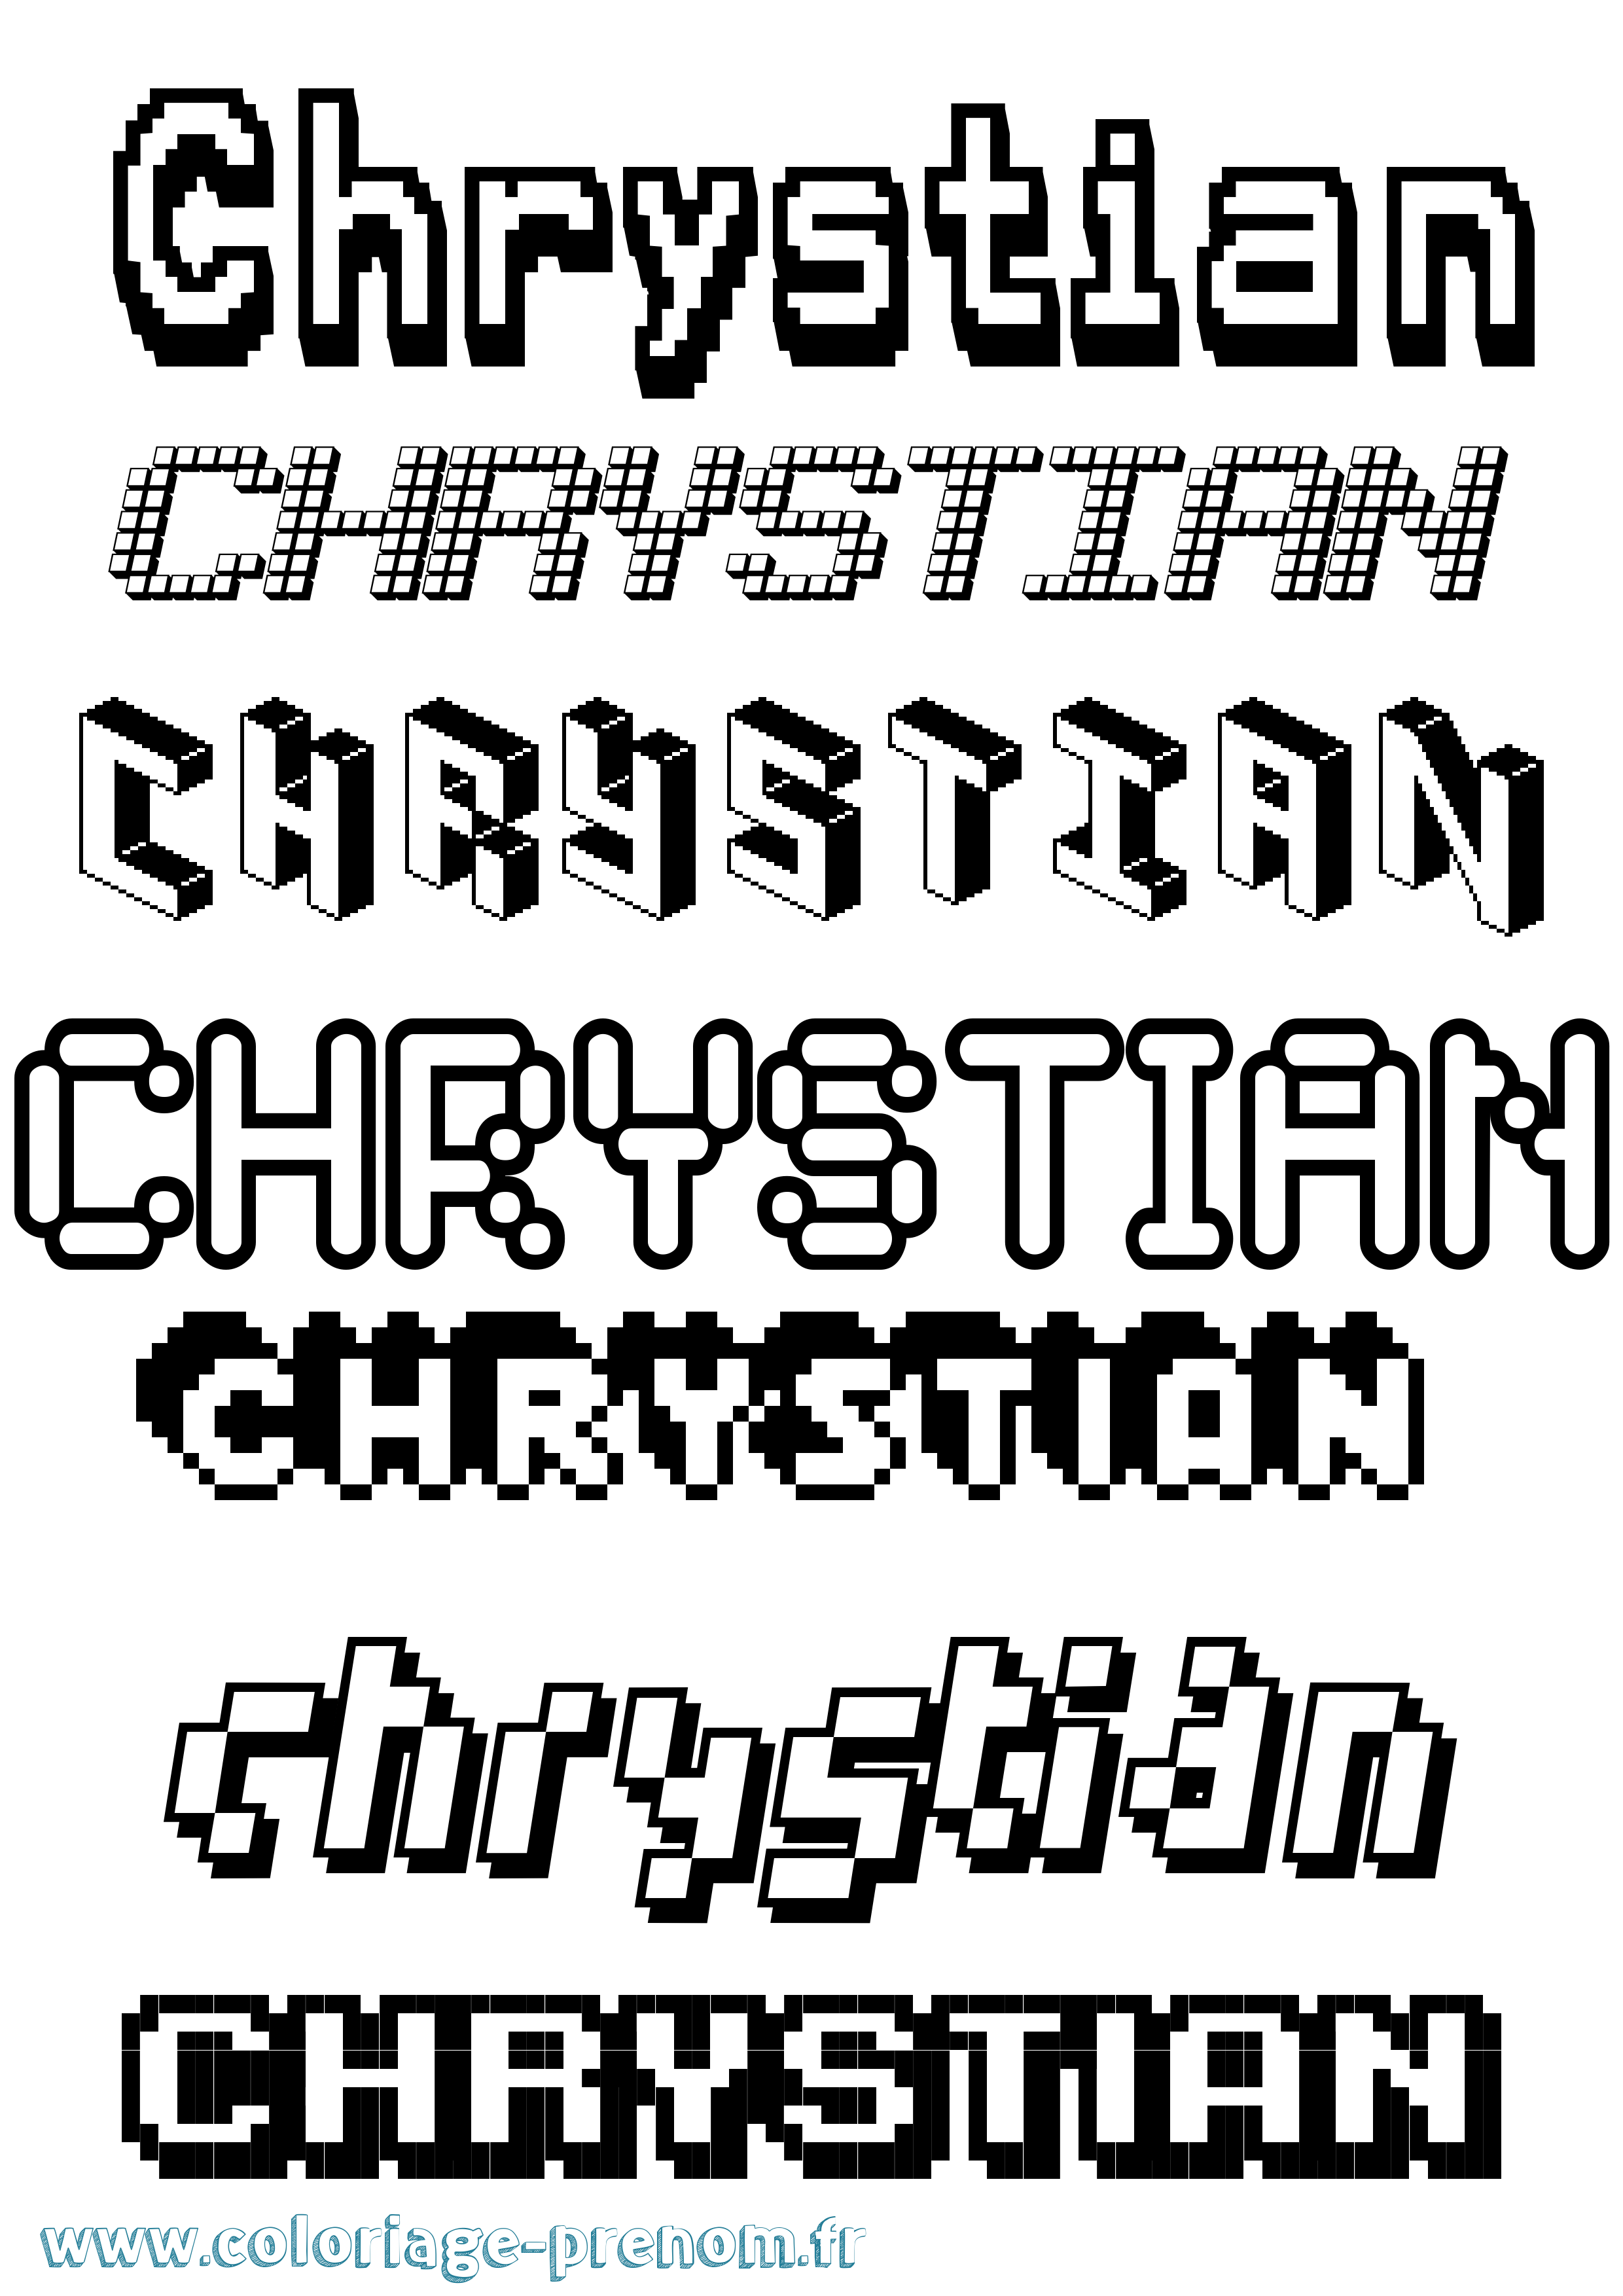 Coloriage prénom Chrystian Pixel